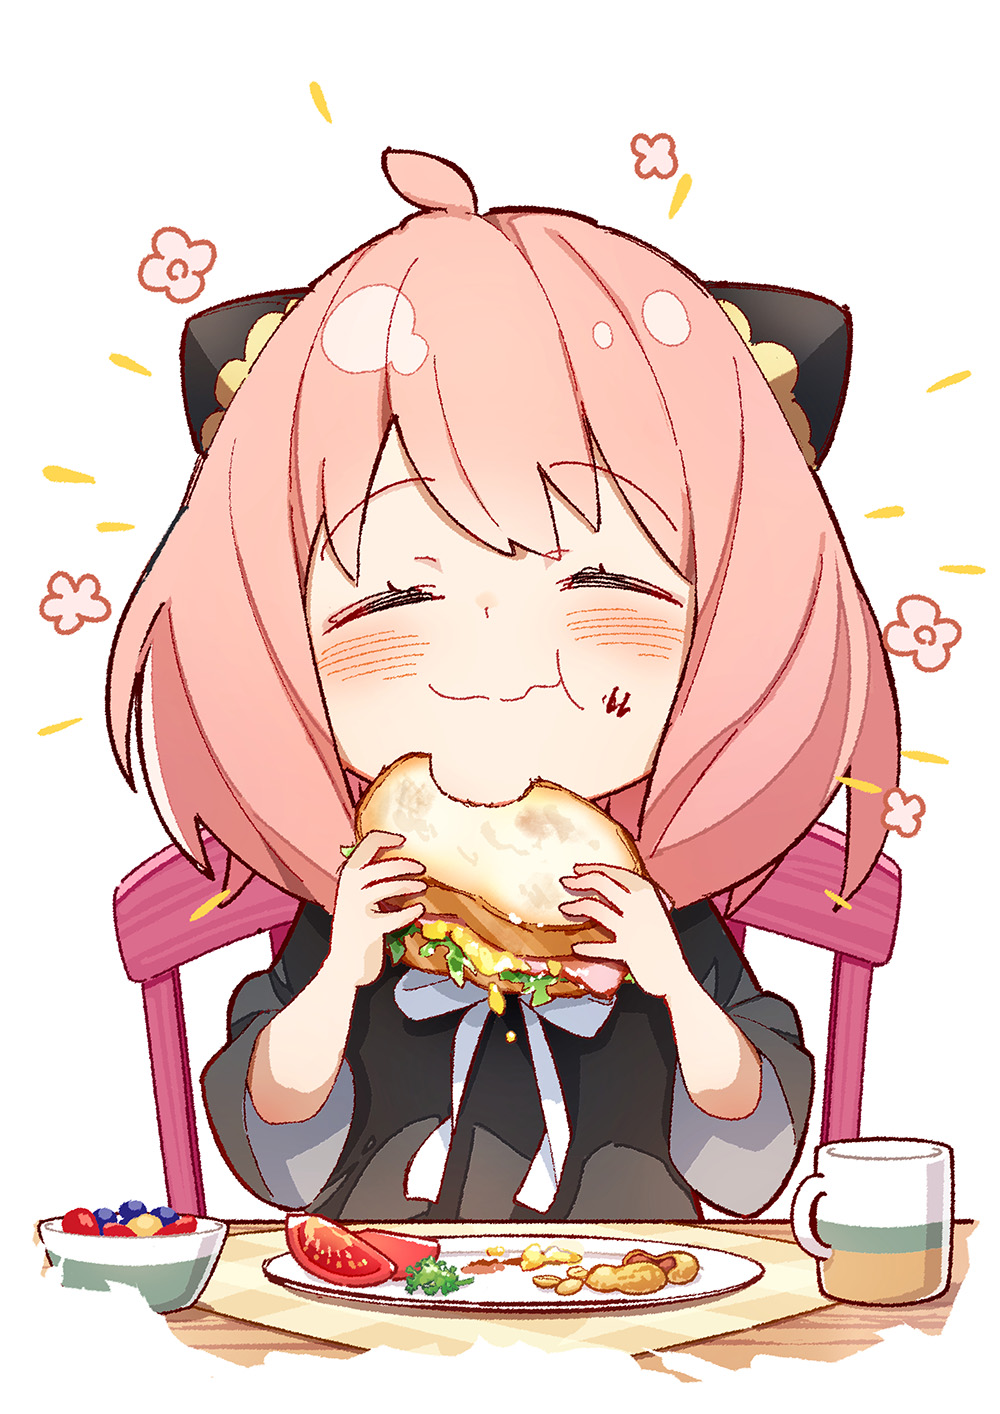 Anime 1000x1414 Spy x Family anime girls anime Anya Forger food eating sandwiches tomatoes